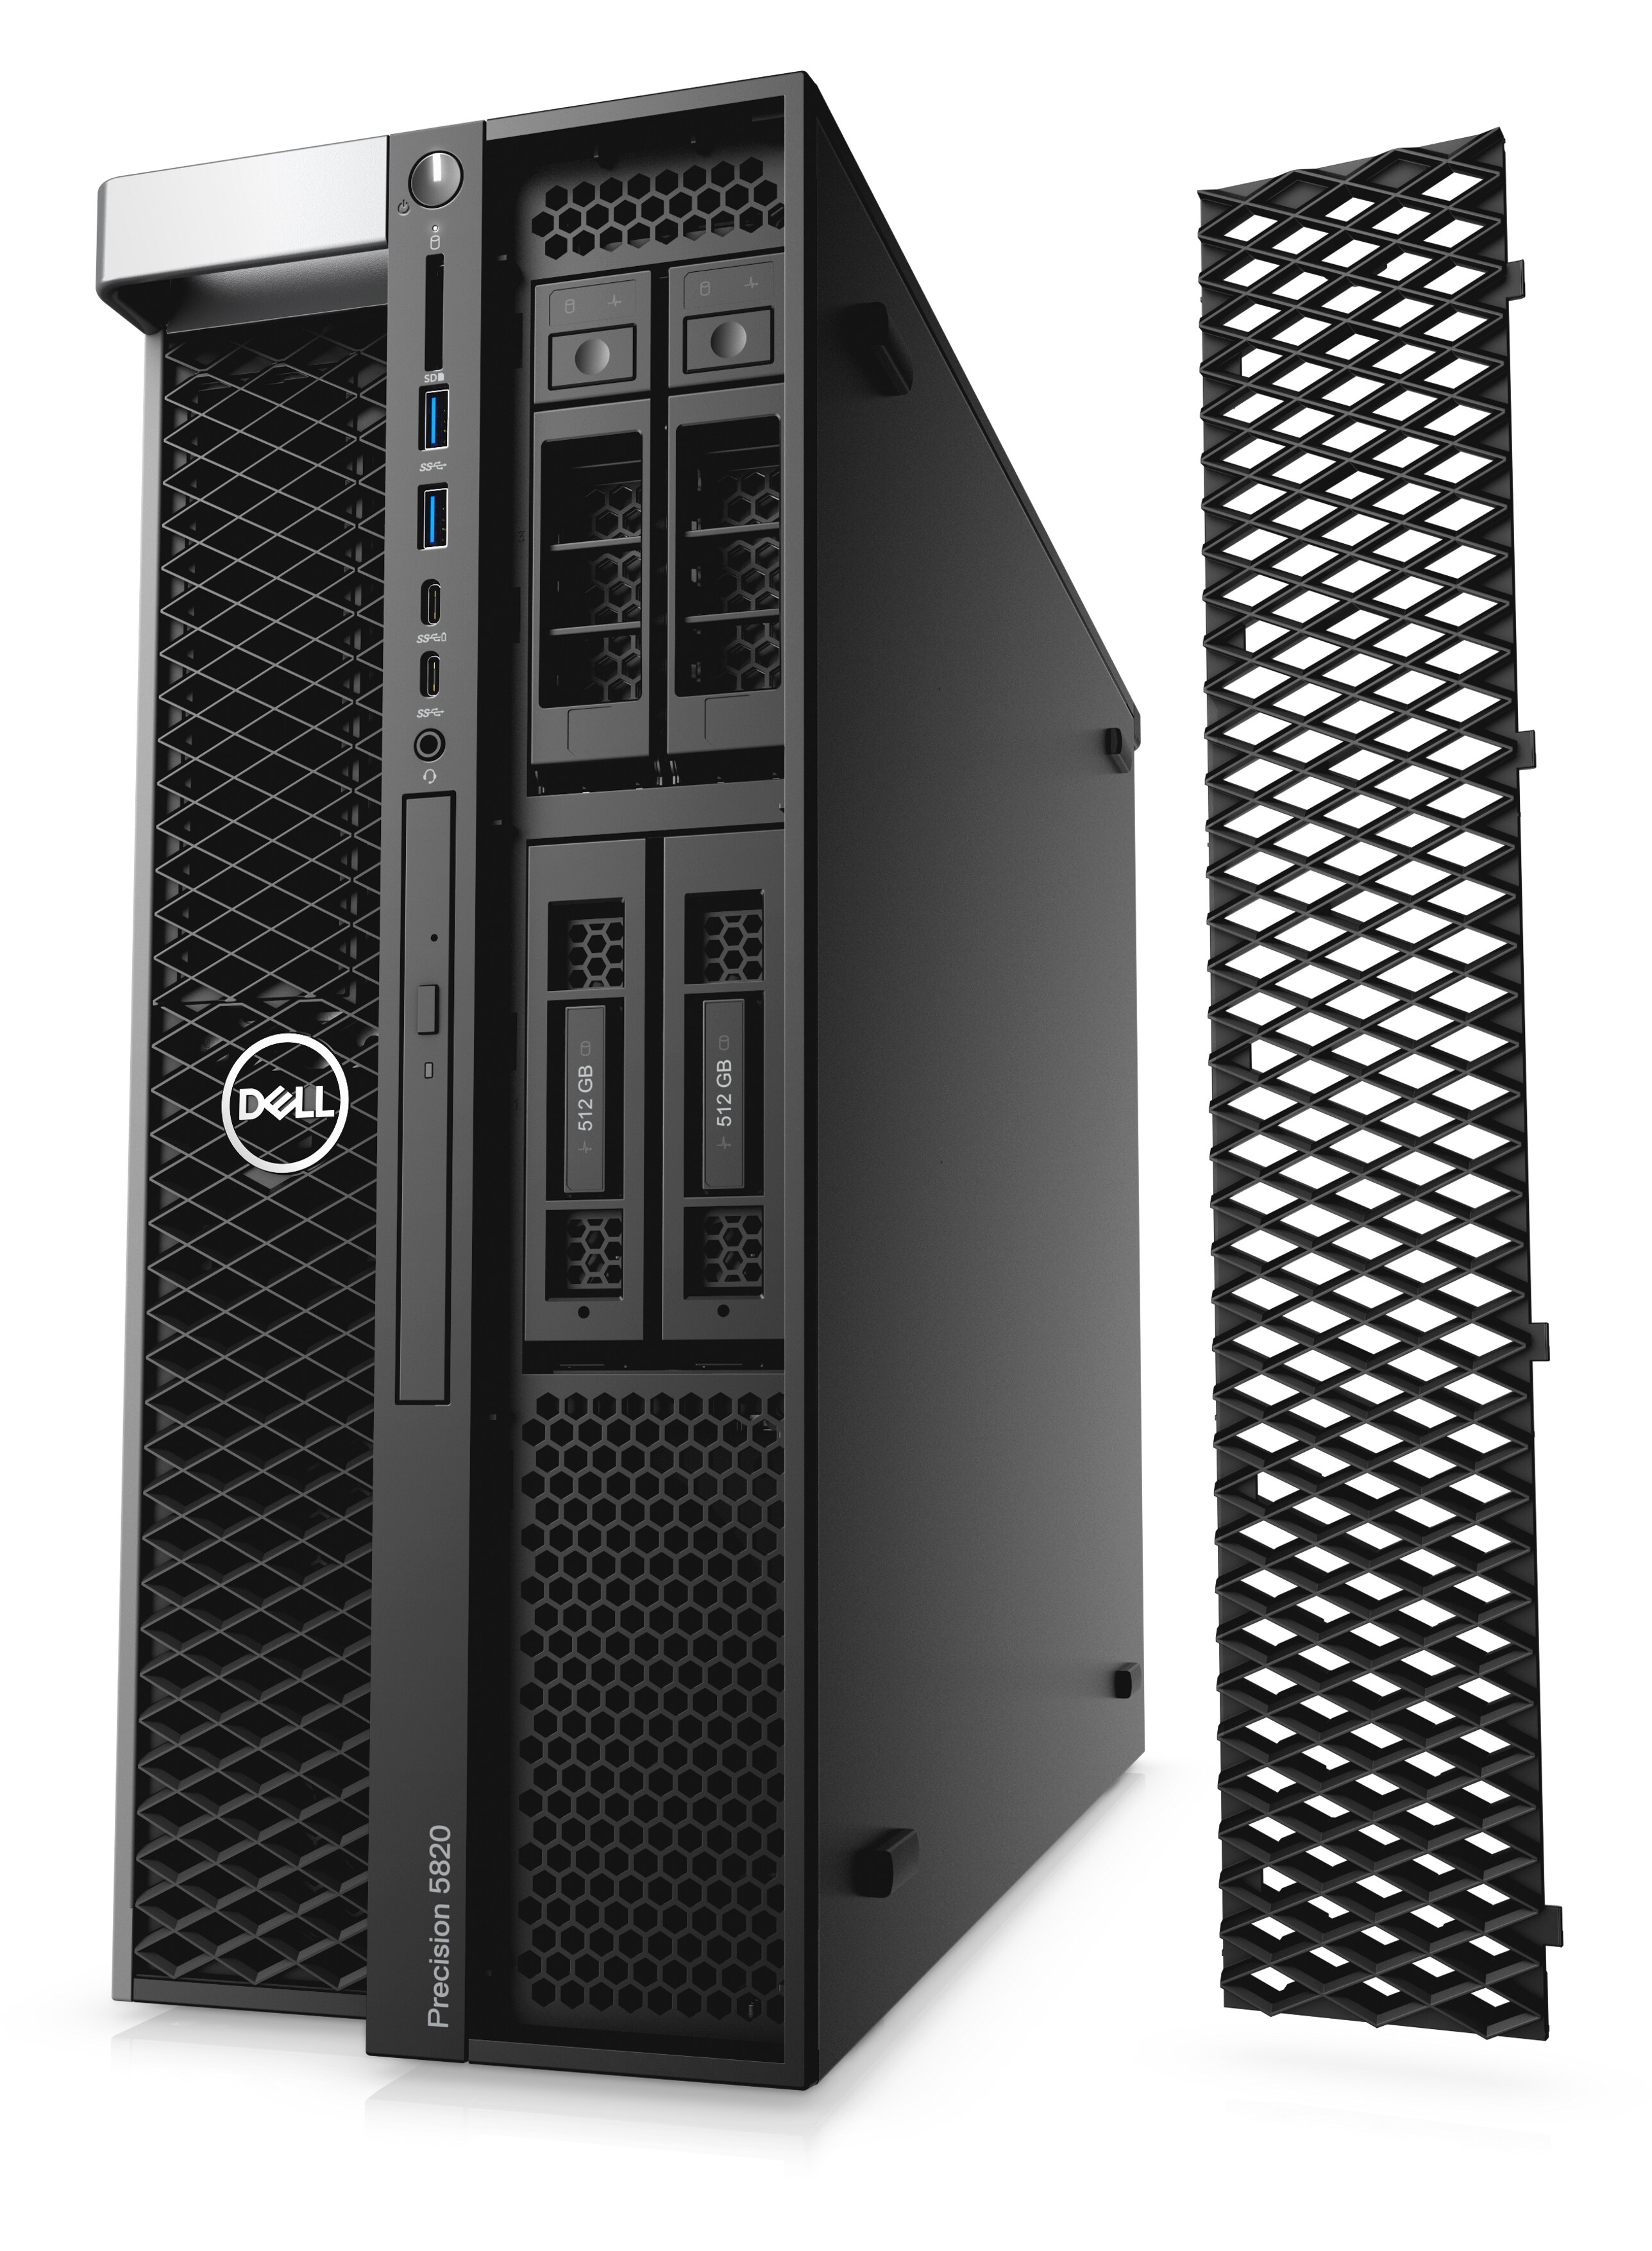 Precision 5820 Desktop Tower Workstation | Dell USA